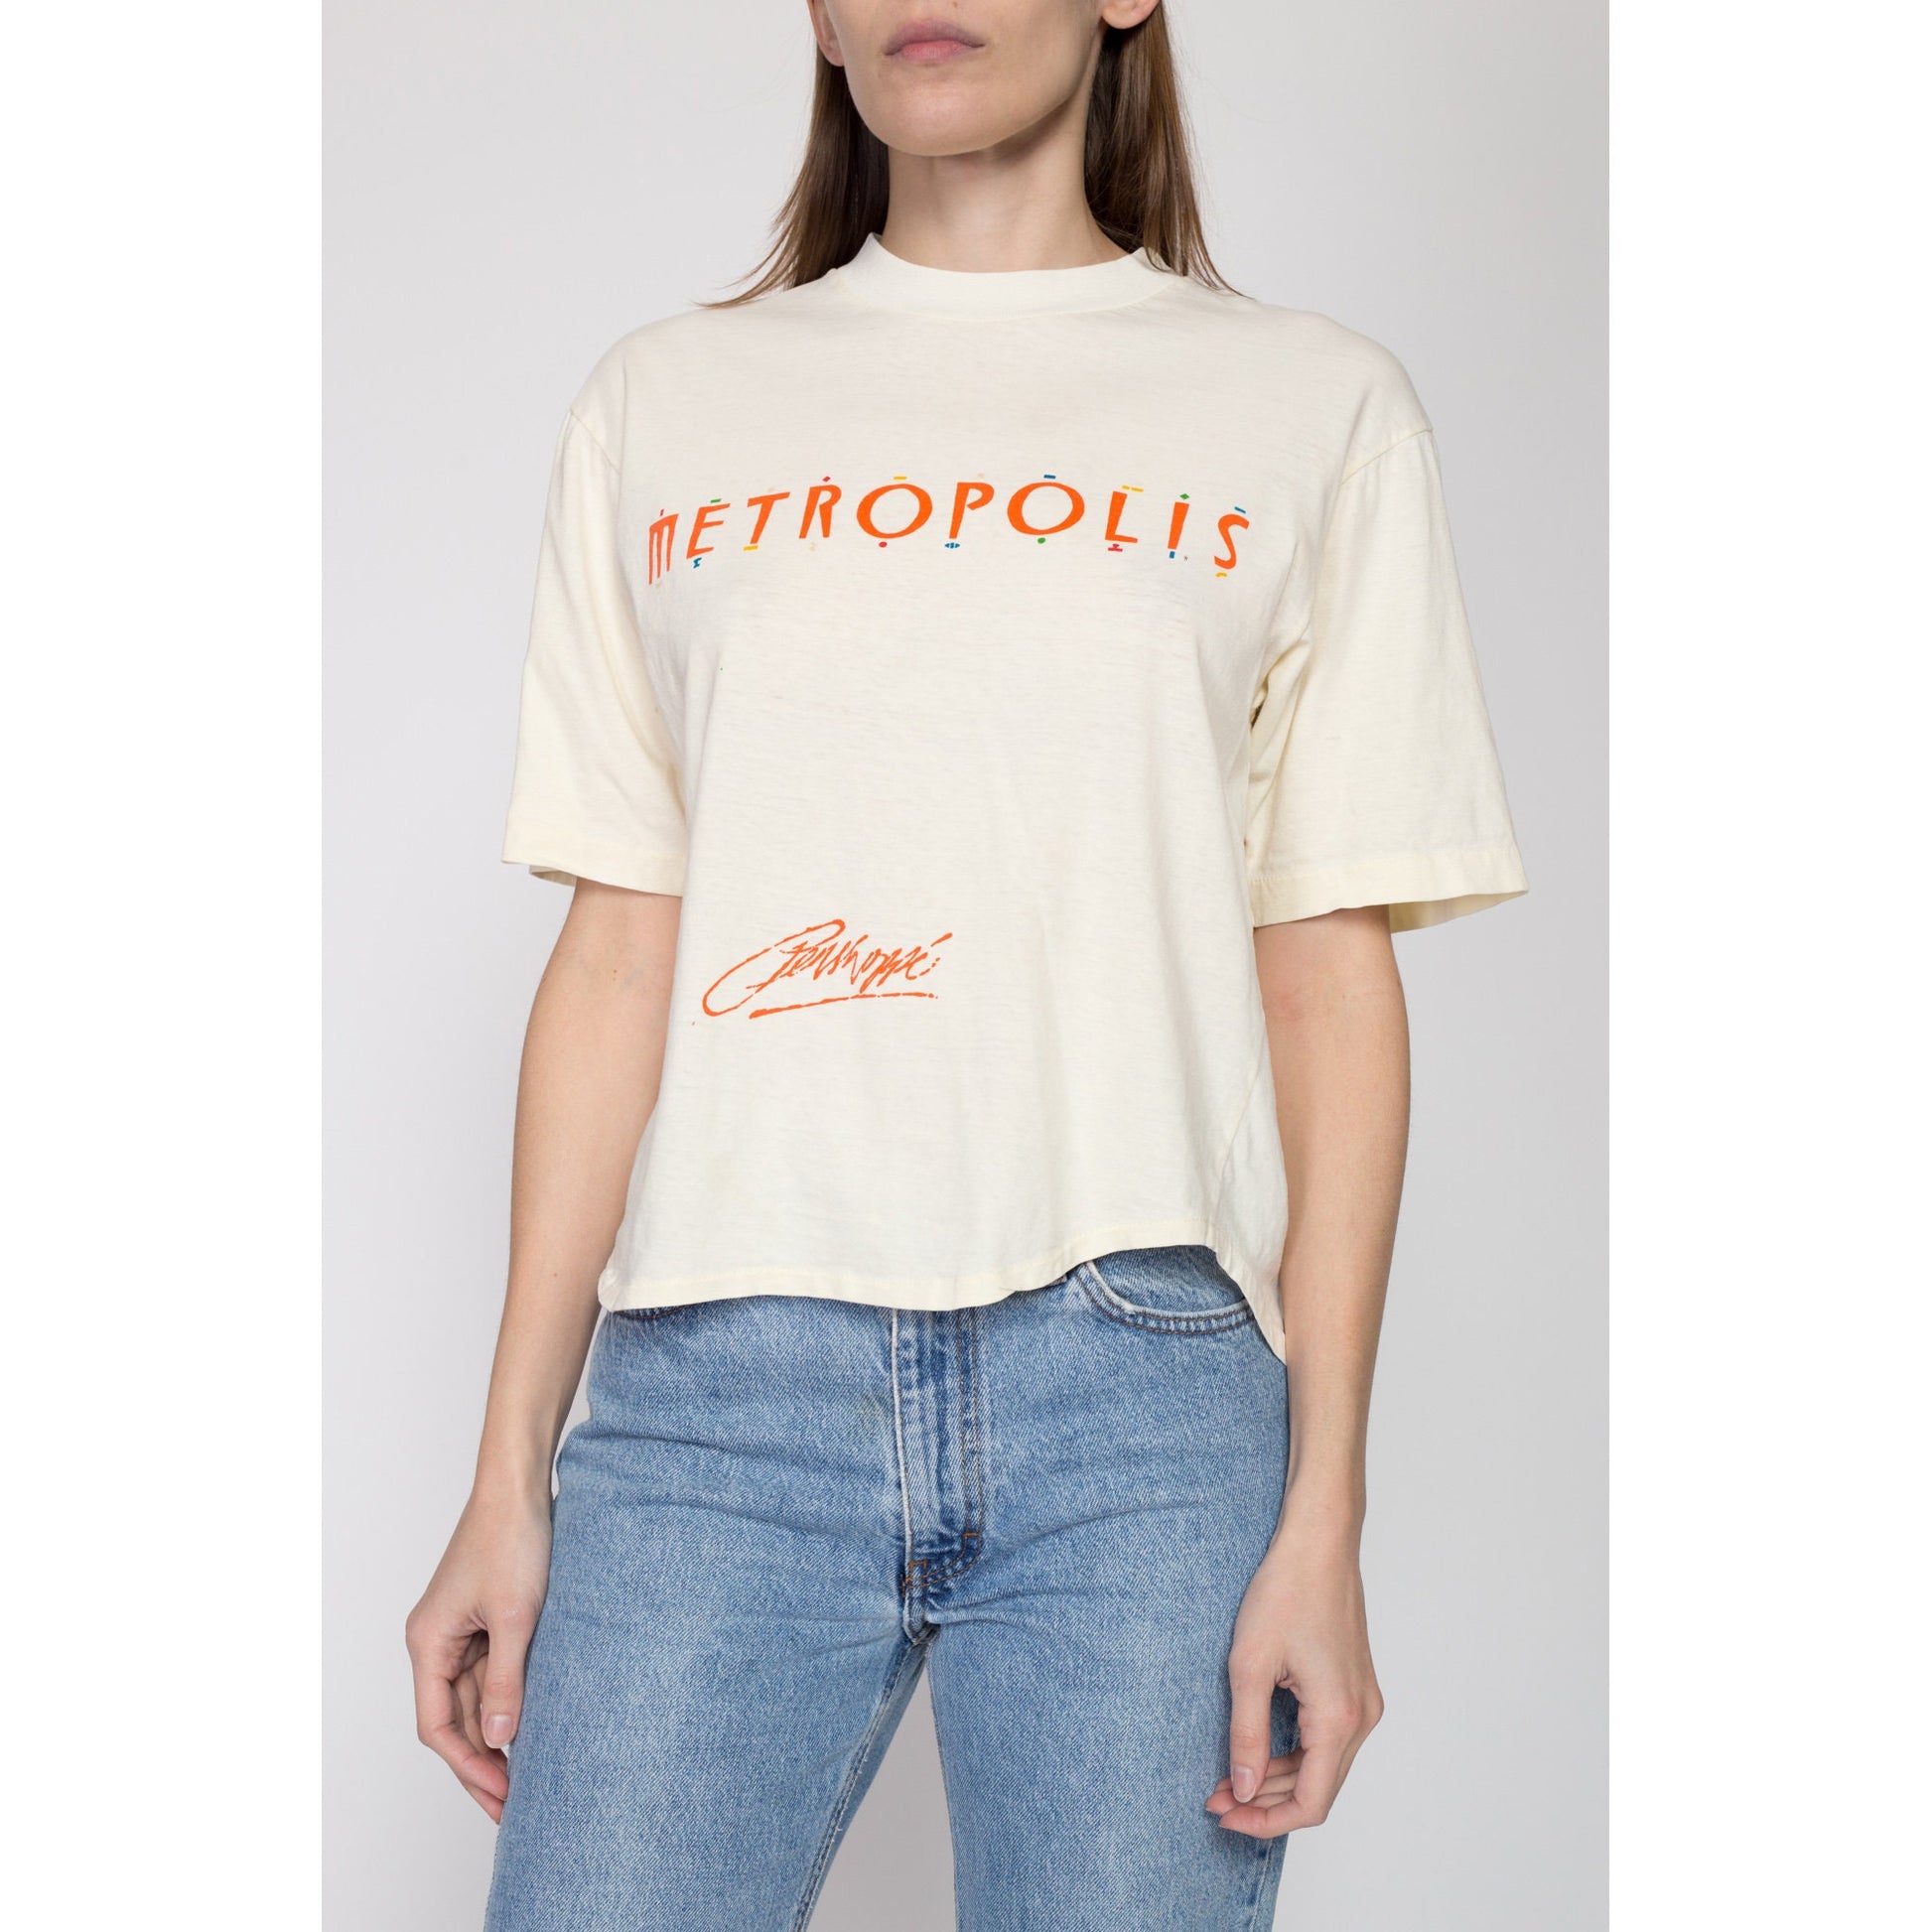 Medium 80s Penshoppé Metropolis T Shirt | Vintage Distressed Cropped Graphic Tee